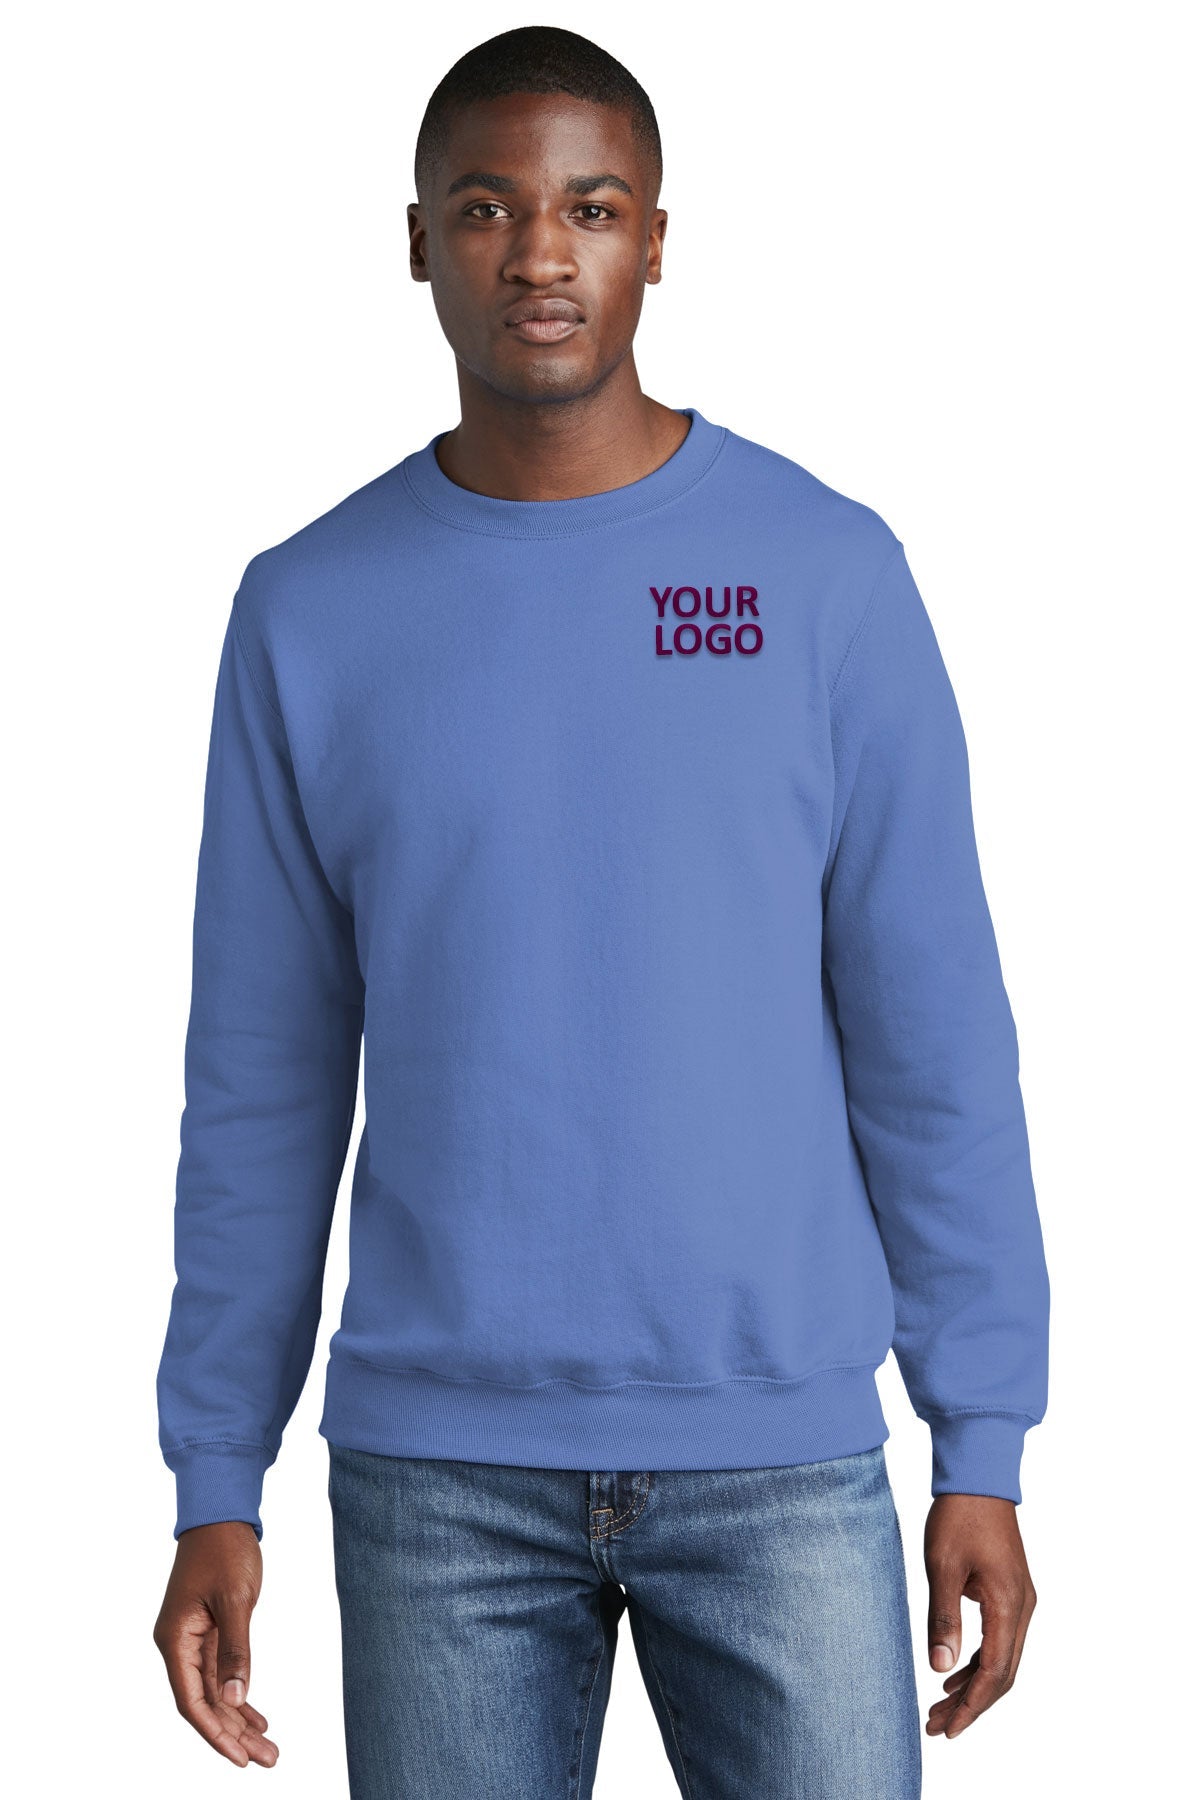 port & company carolina blue pc78 custom sweatshirts for business